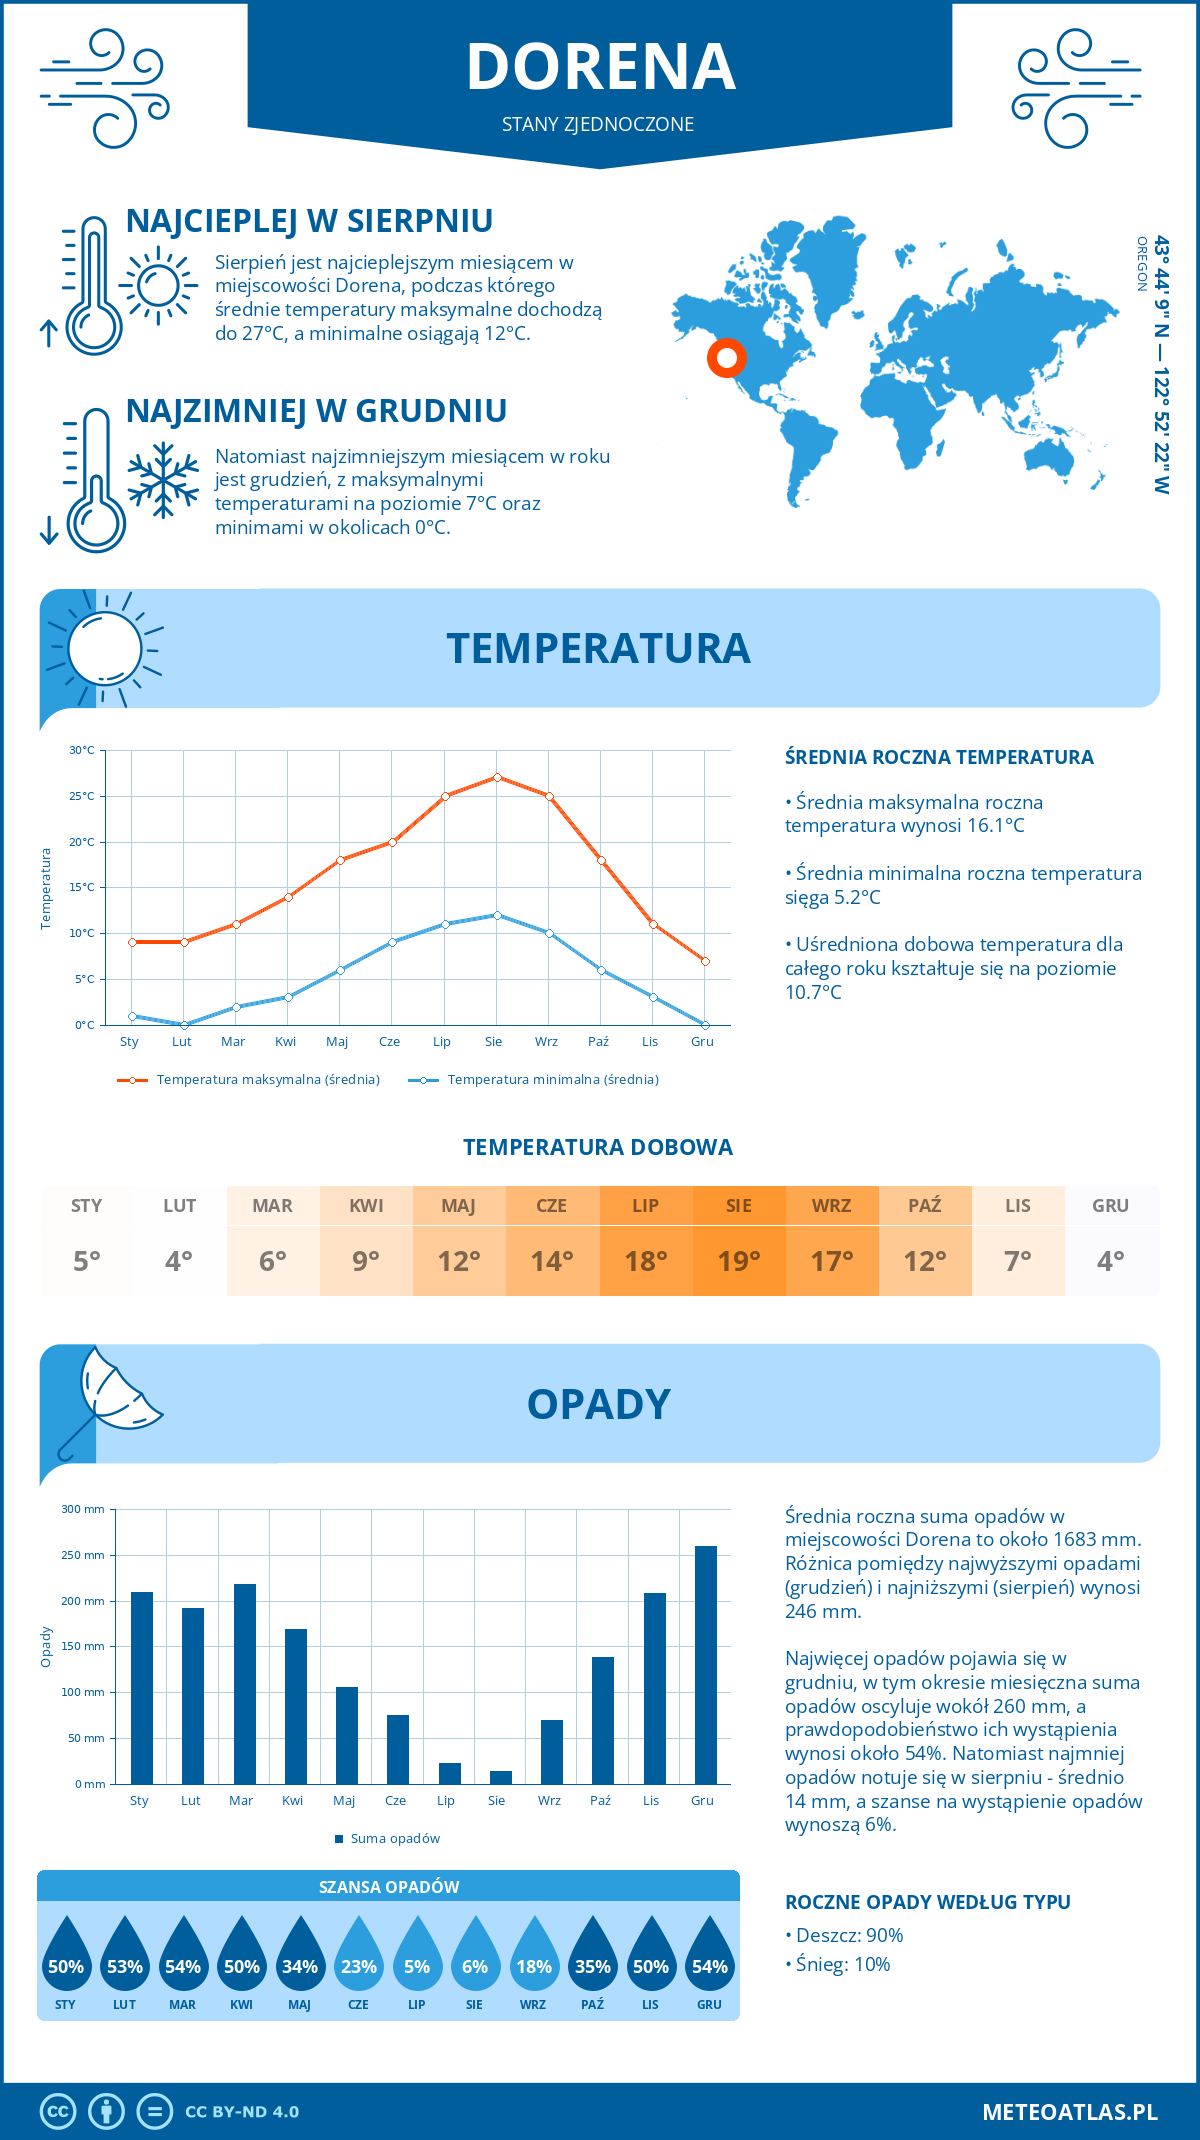 Pogoda Dorena (Stany Zjednoczone). Temperatura oraz opady.